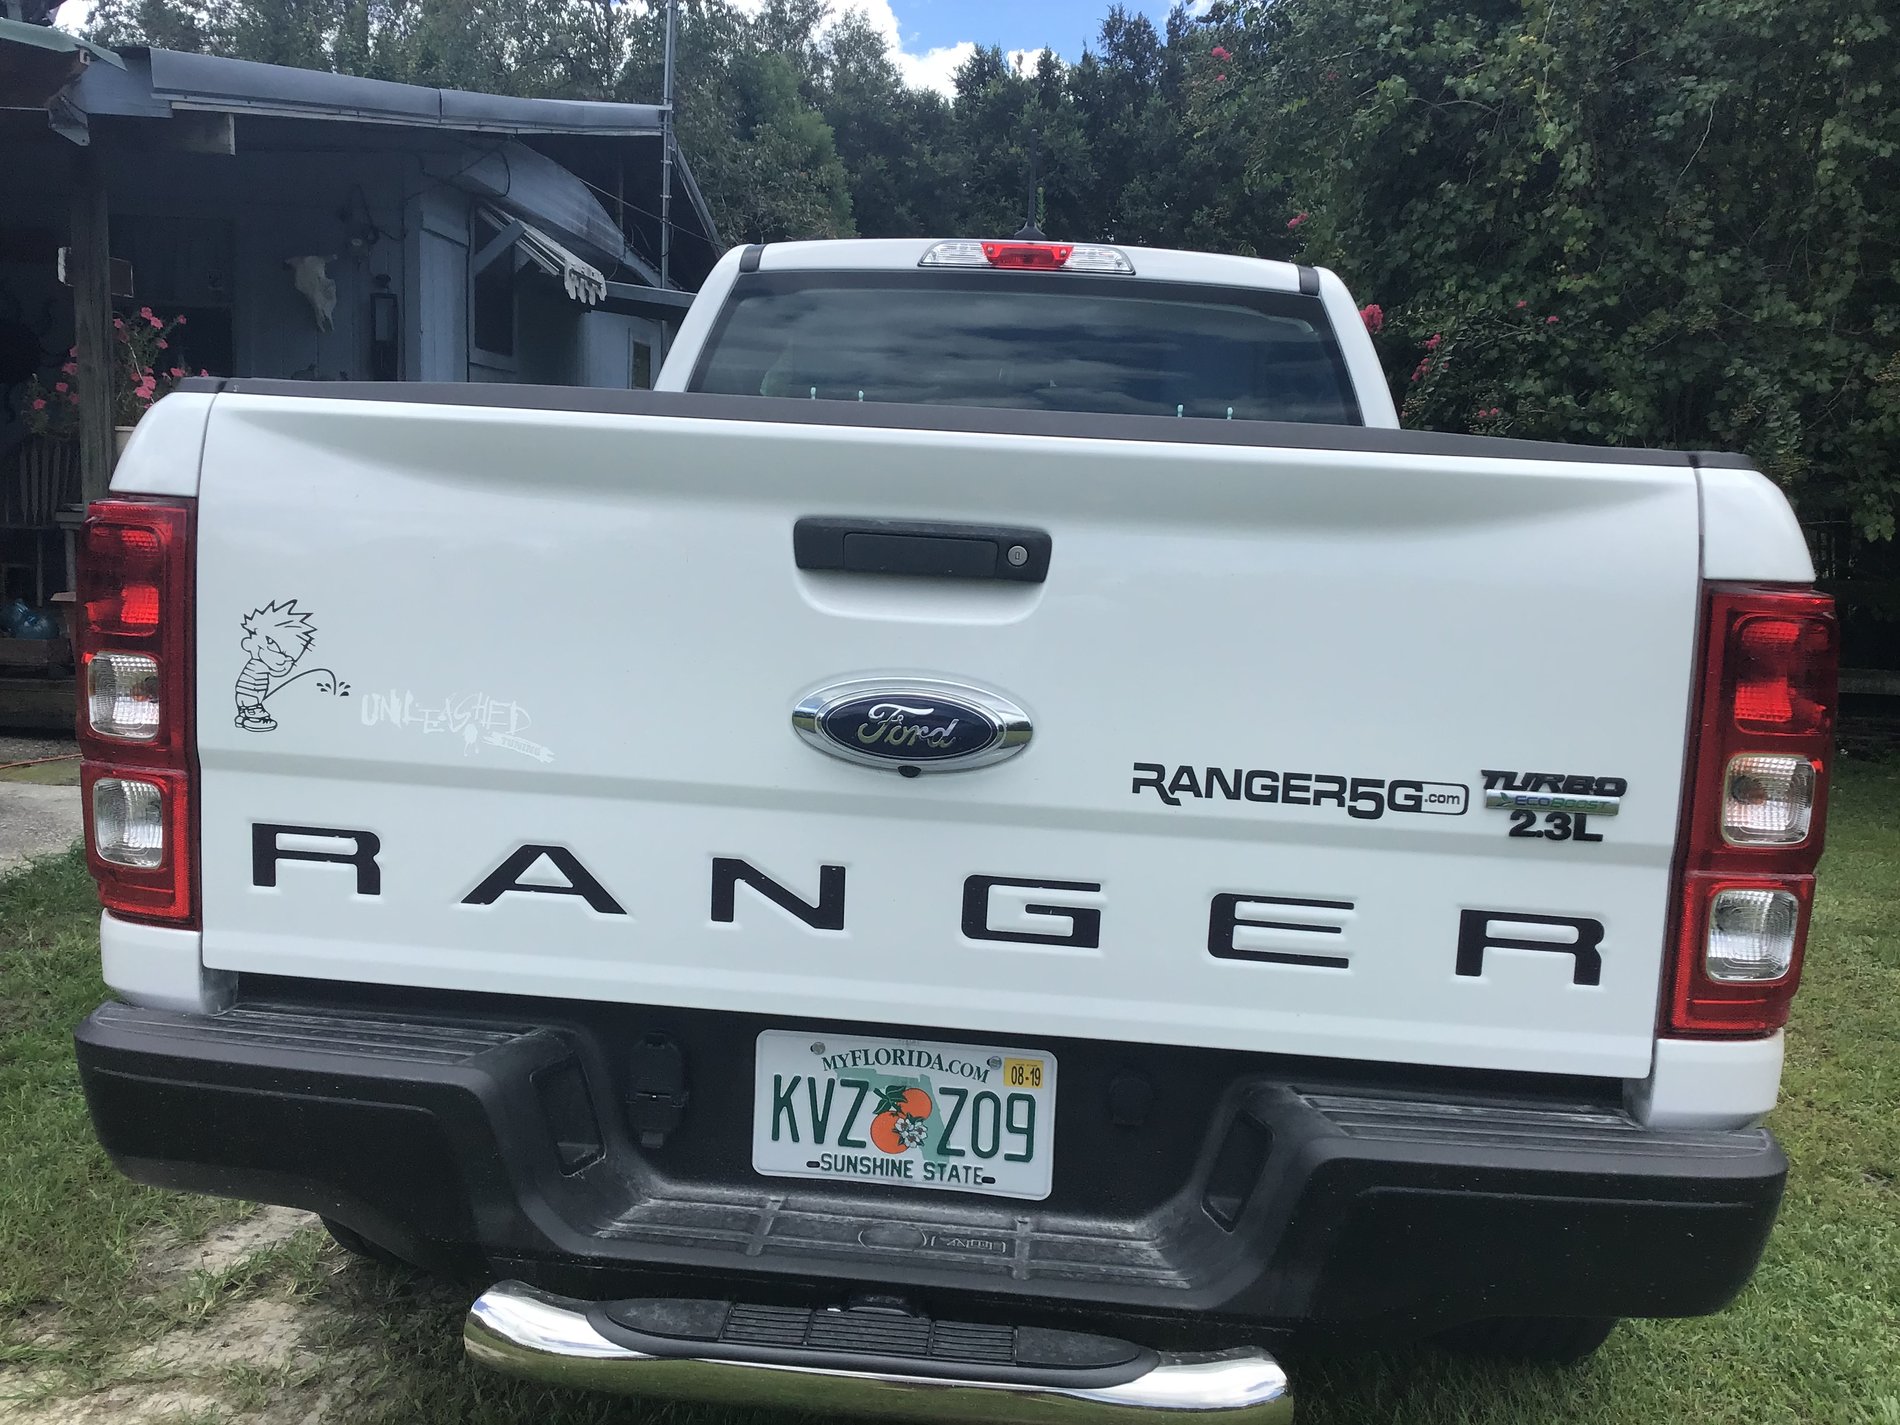 Ford Ranger Lets see those Cab window decals!! CA08E06D-000C-4705-8C4E-02E2D1C3F75E